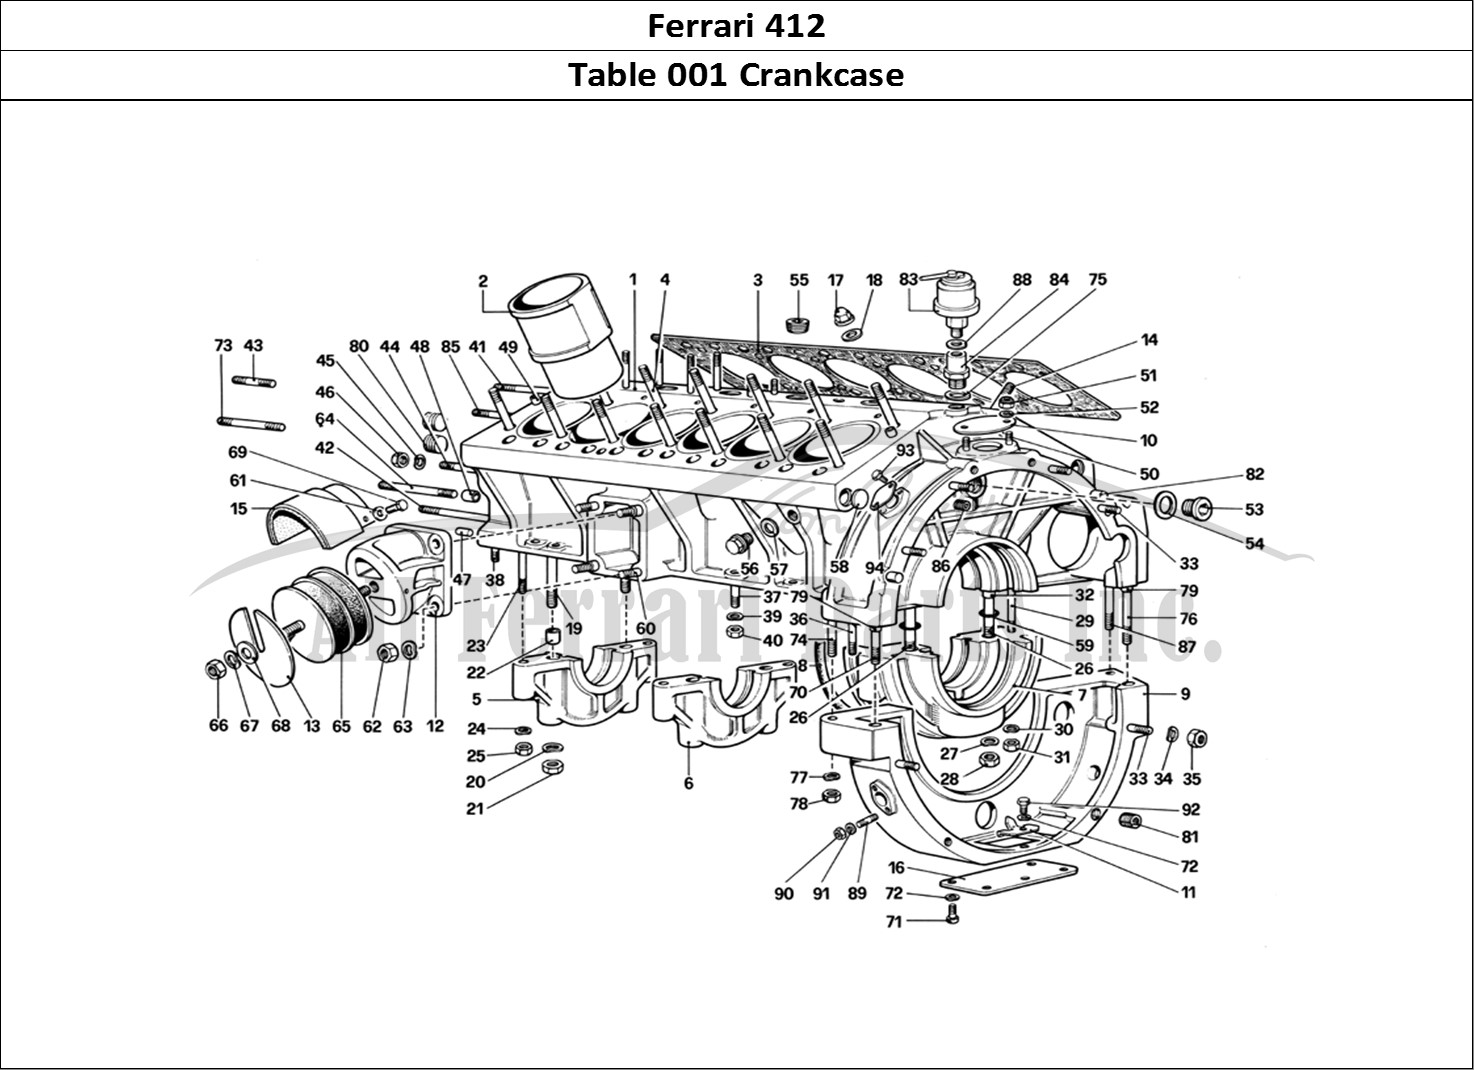 Ferrari Parts Ferrari 412 (Mechanical) Page 001 Crankcase